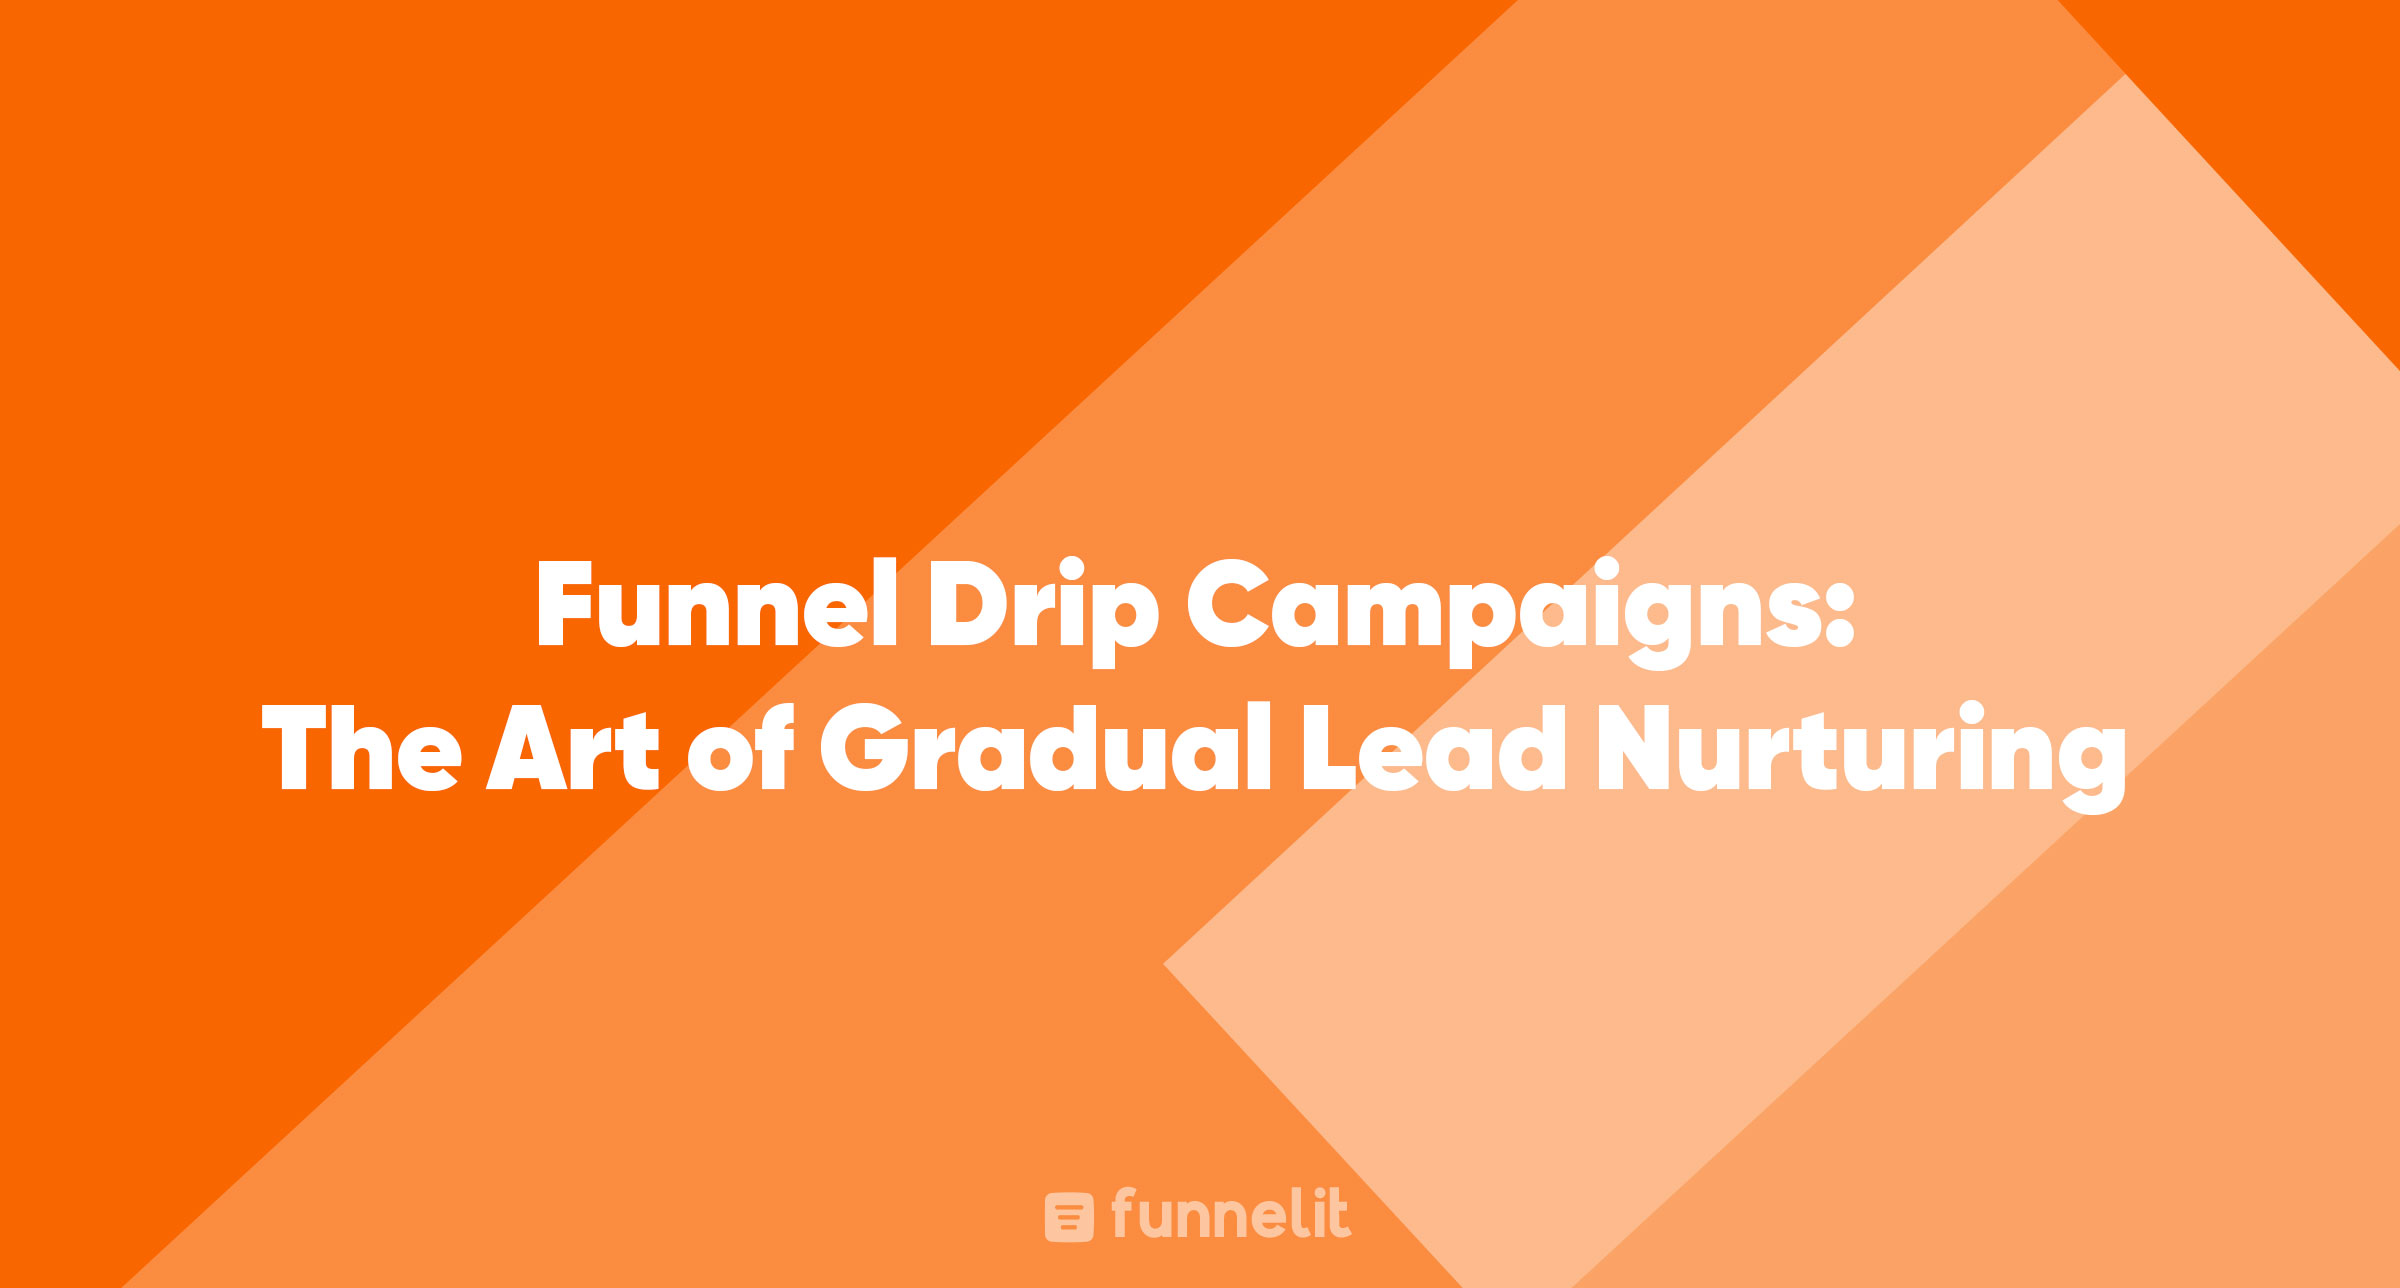 Article | Funnel Drip Campaigns: The Art of Gradual Lead Nurturing